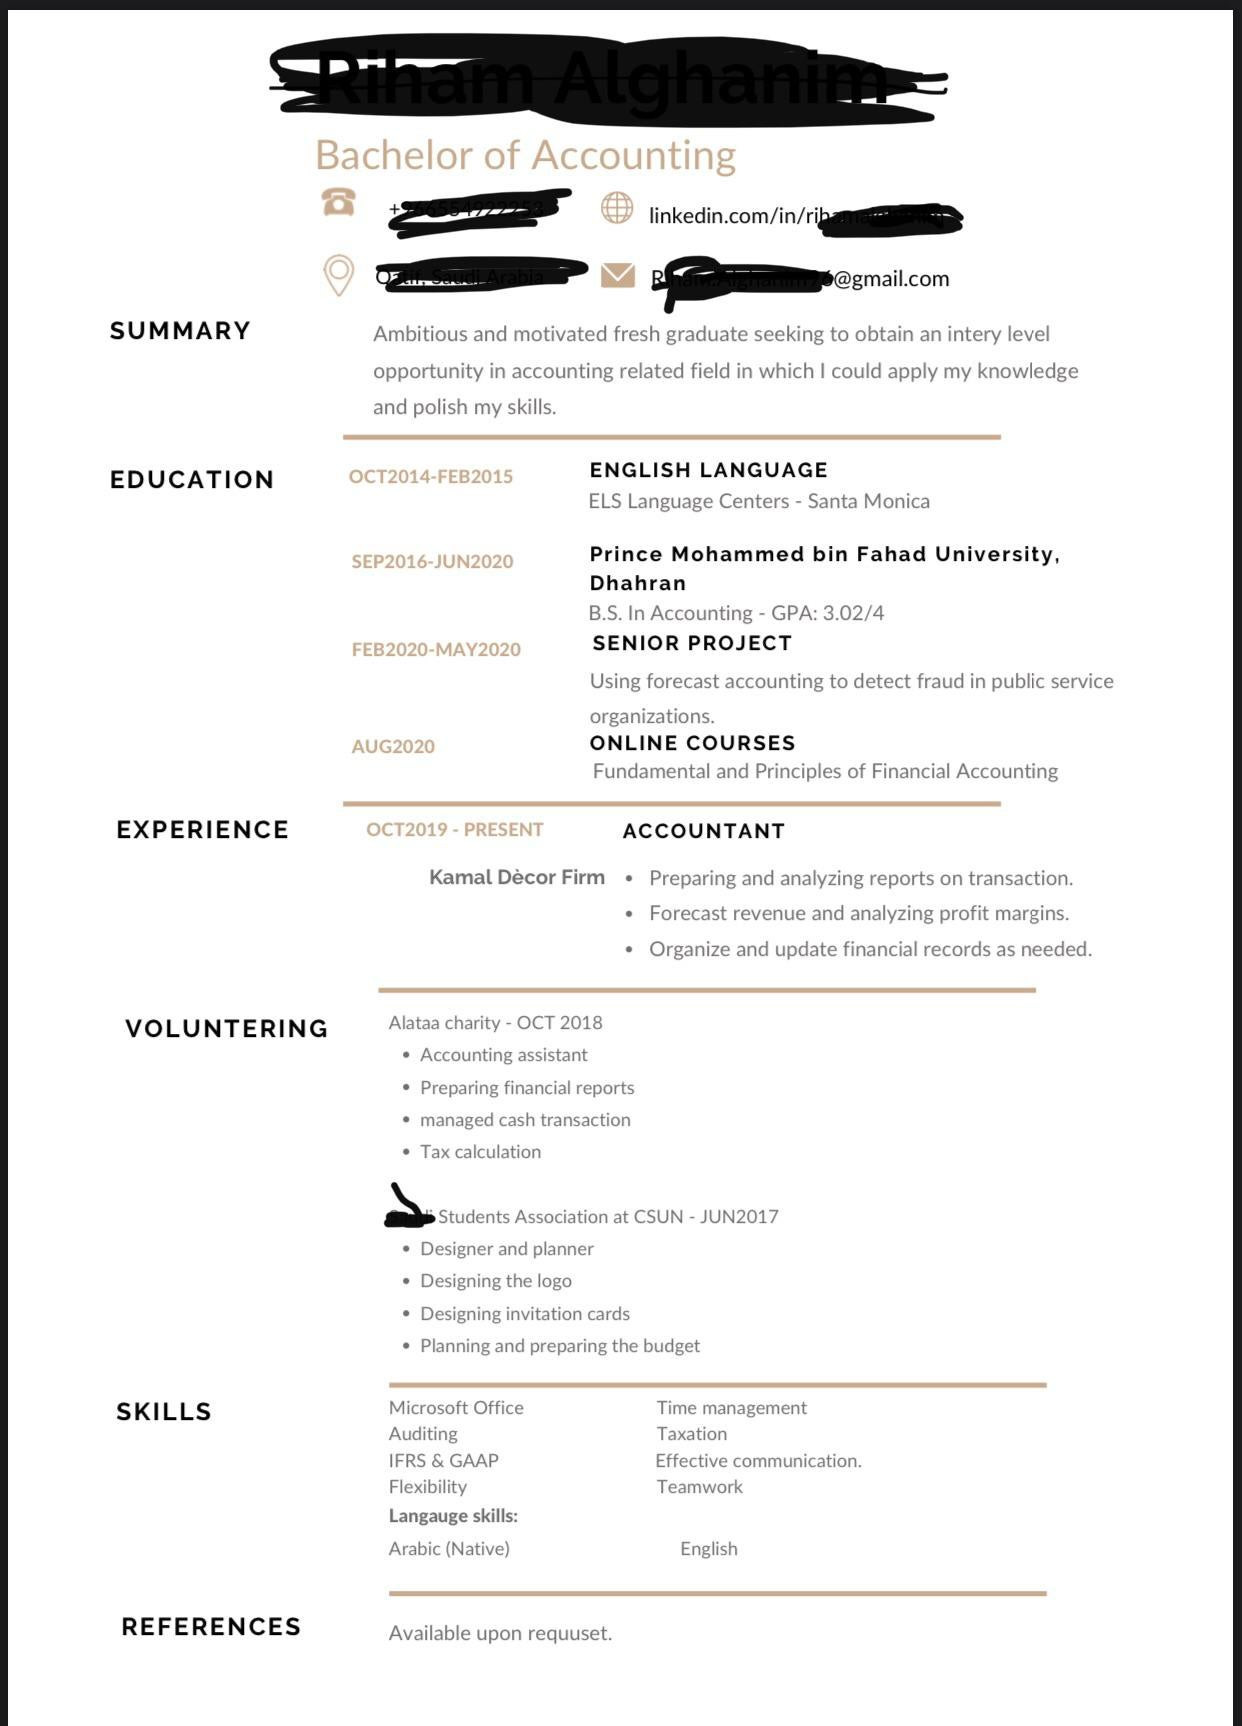 Sample Accounting Resume for Fresh Graduate Fresh Accounting Graduate. Looking to Land My First Job In Big 4 …